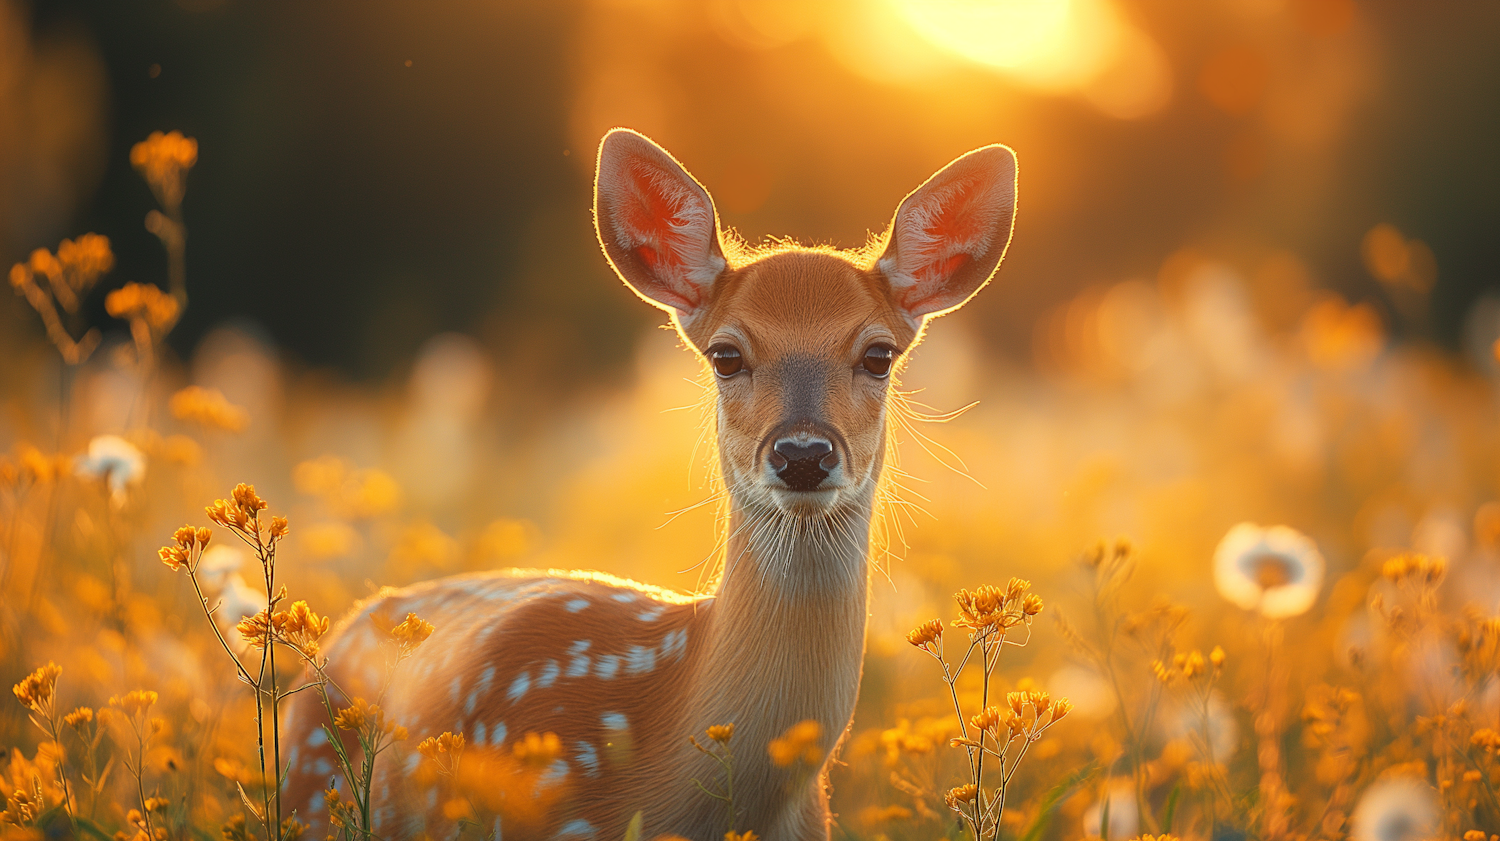 Serene Sunrise with Deer